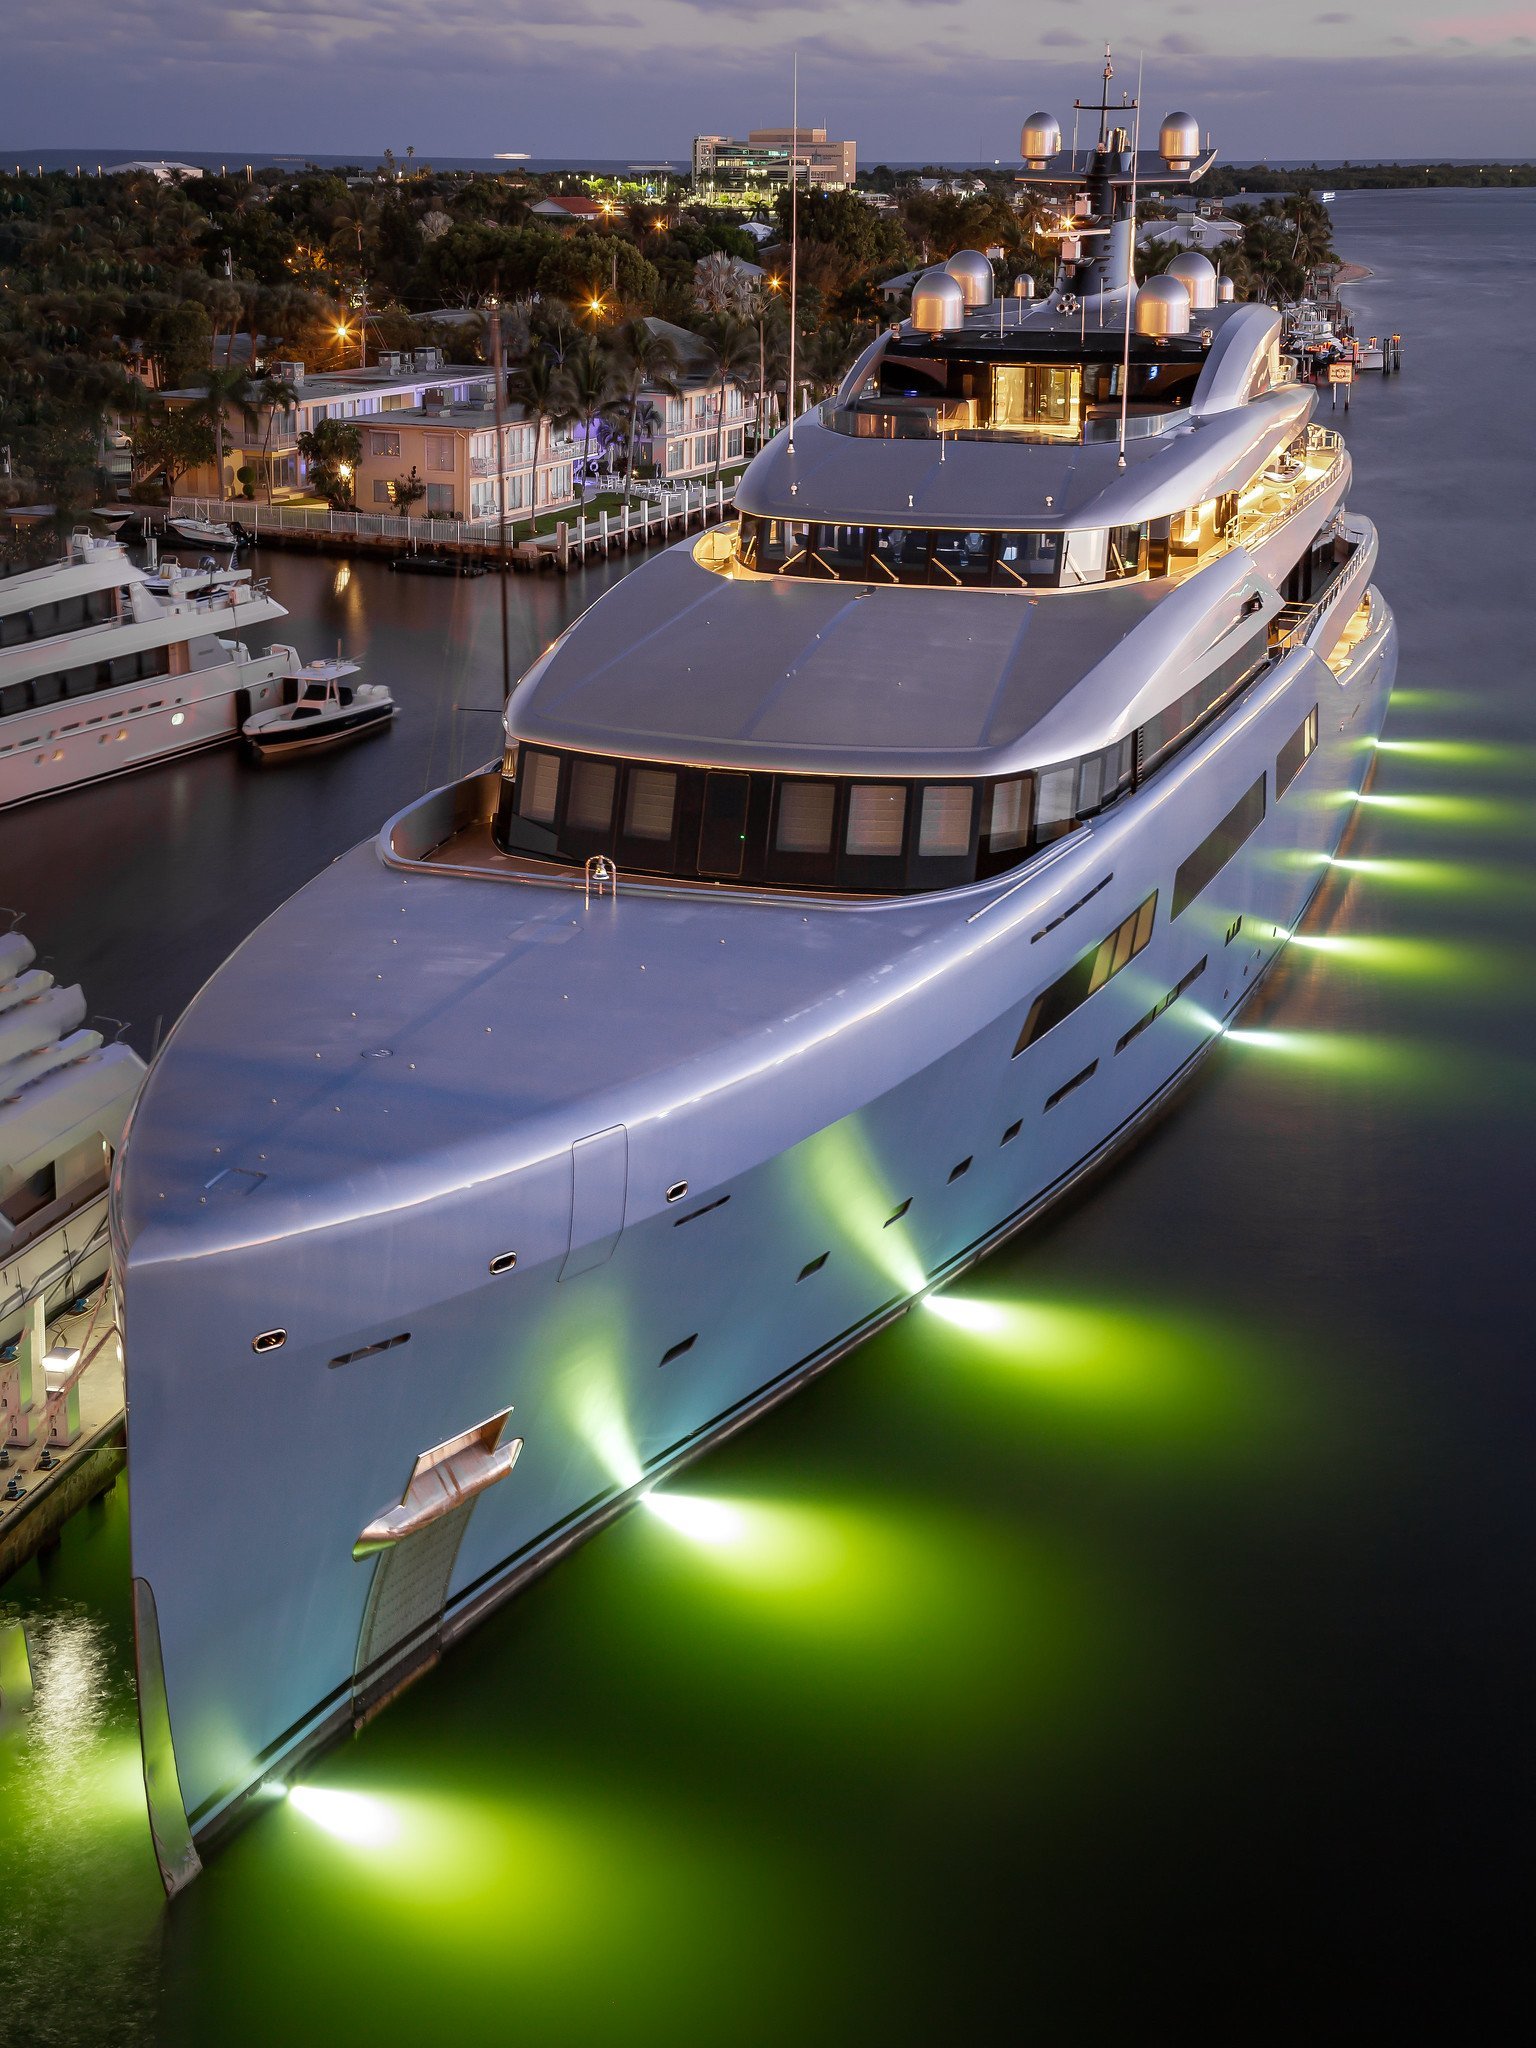 Aviva yacht